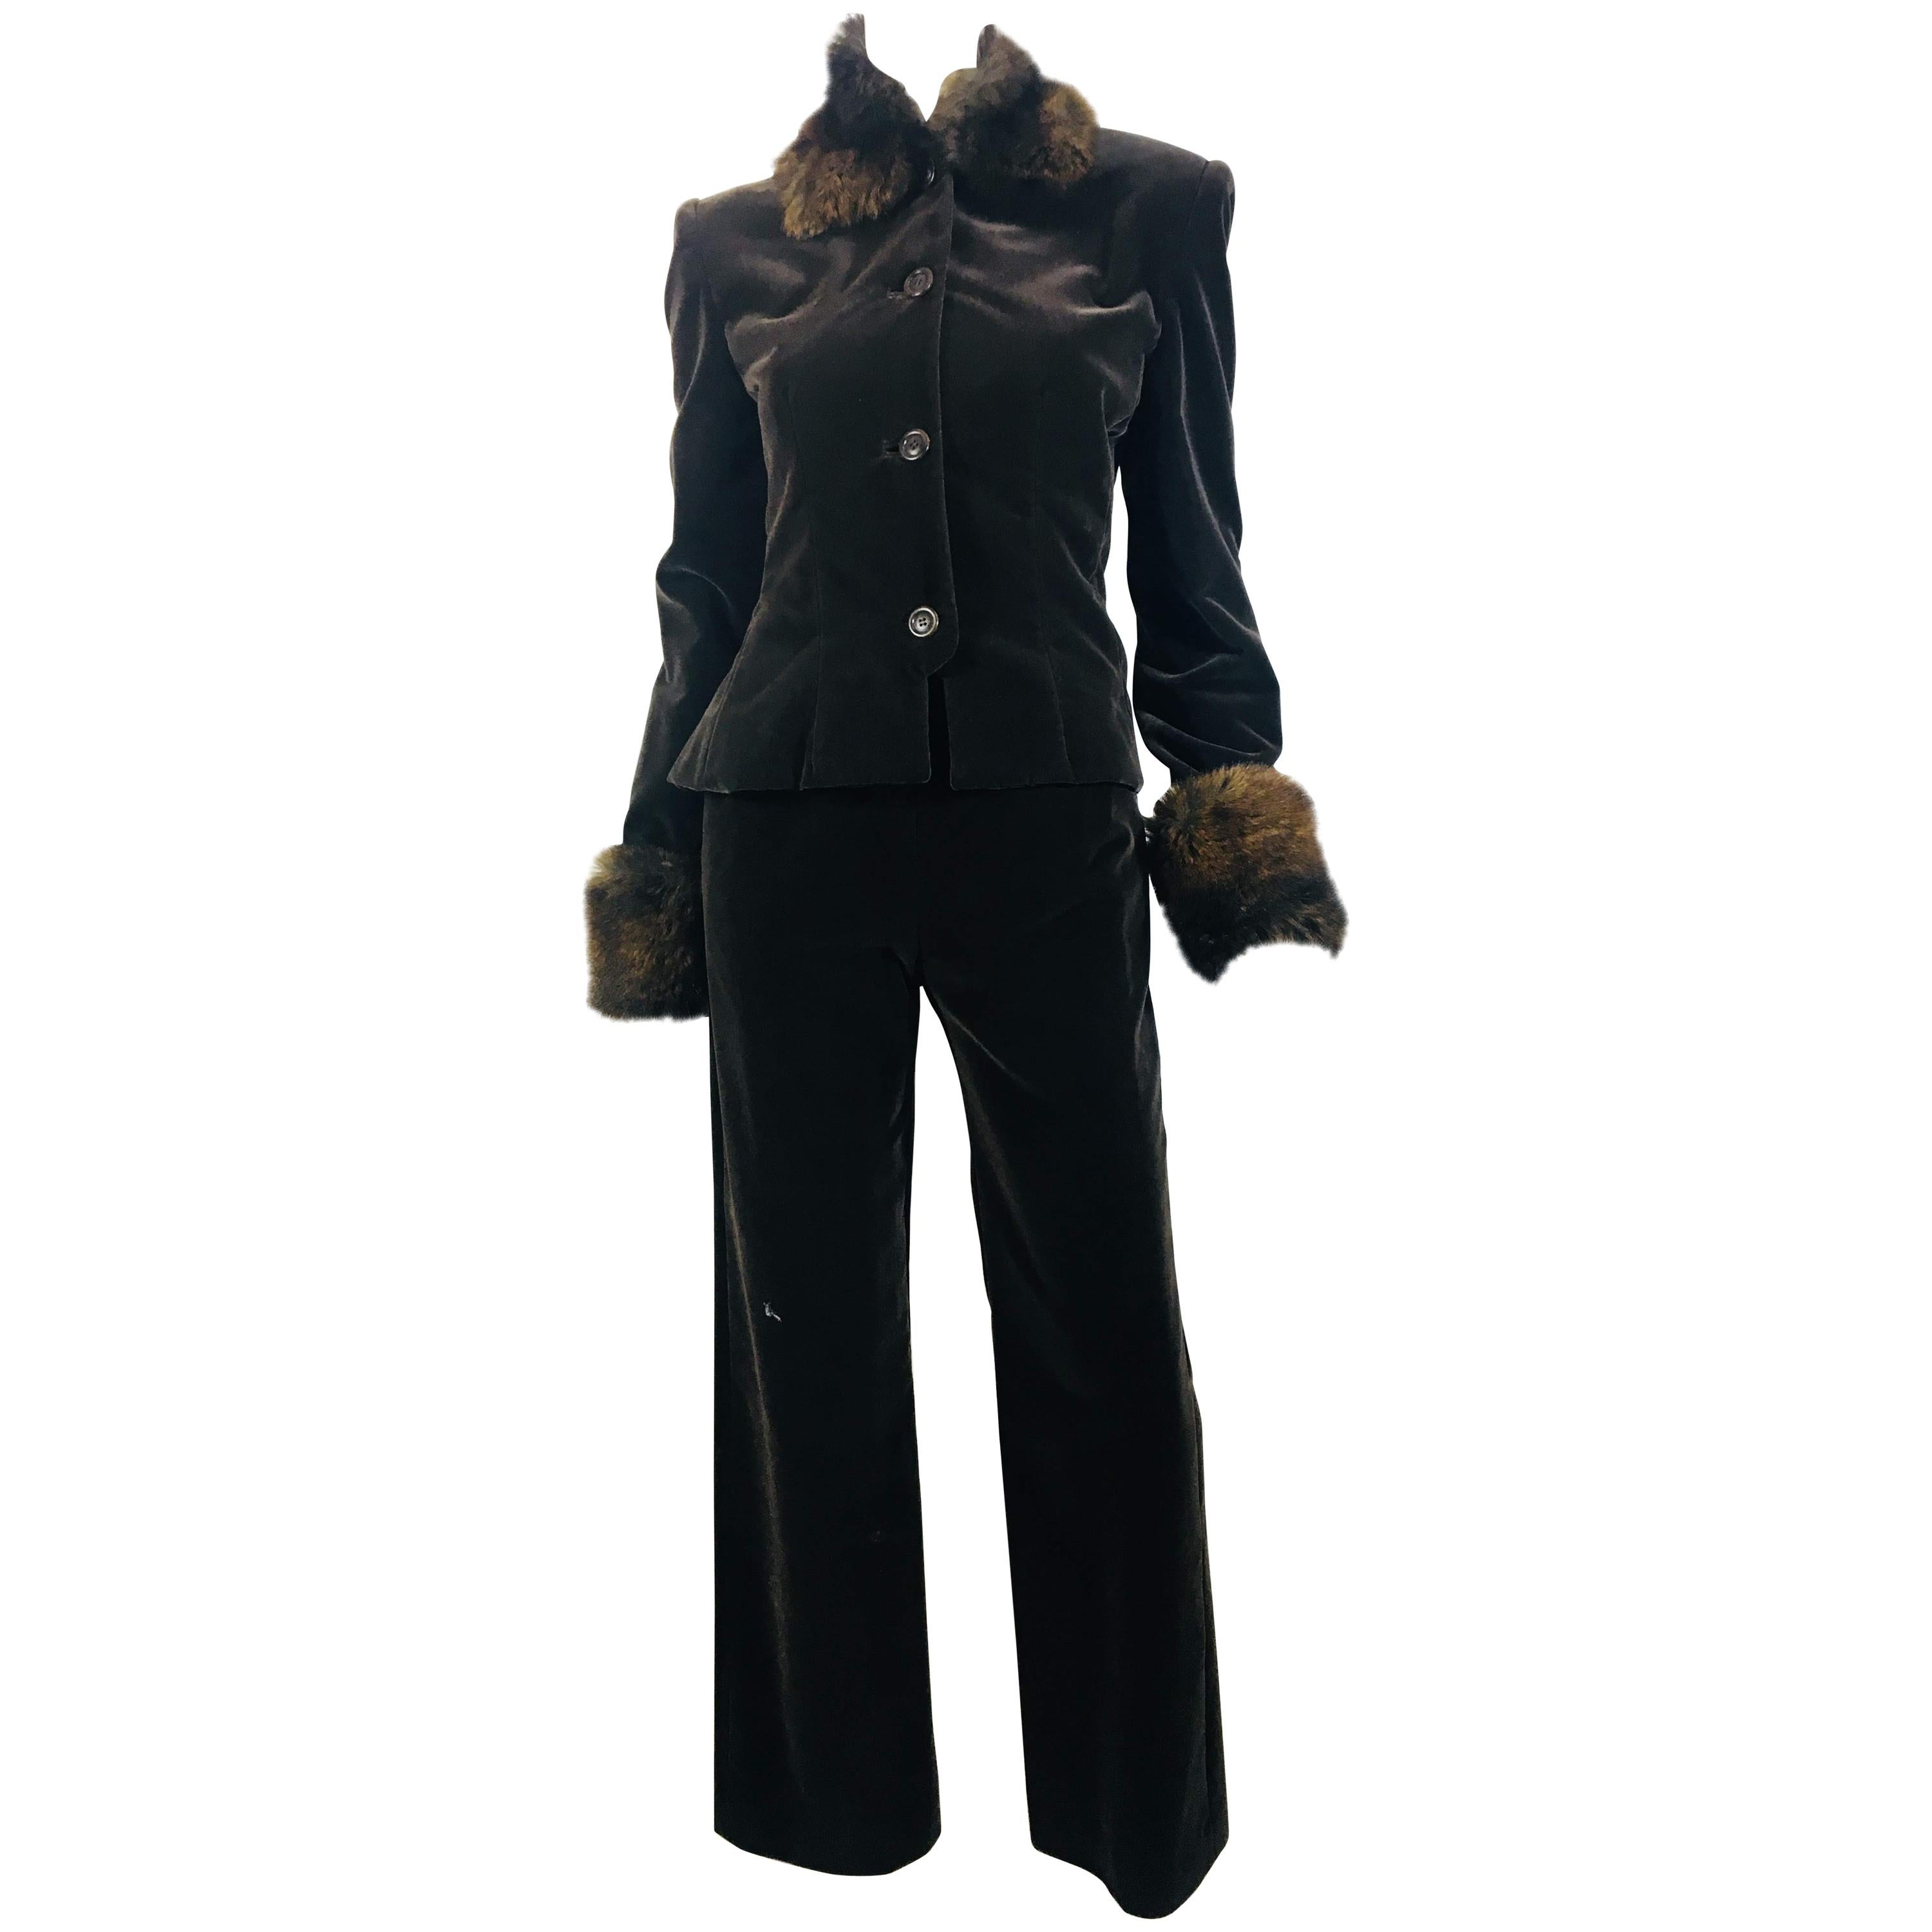 Carolina Herrera Pant Suit with Fur Trim